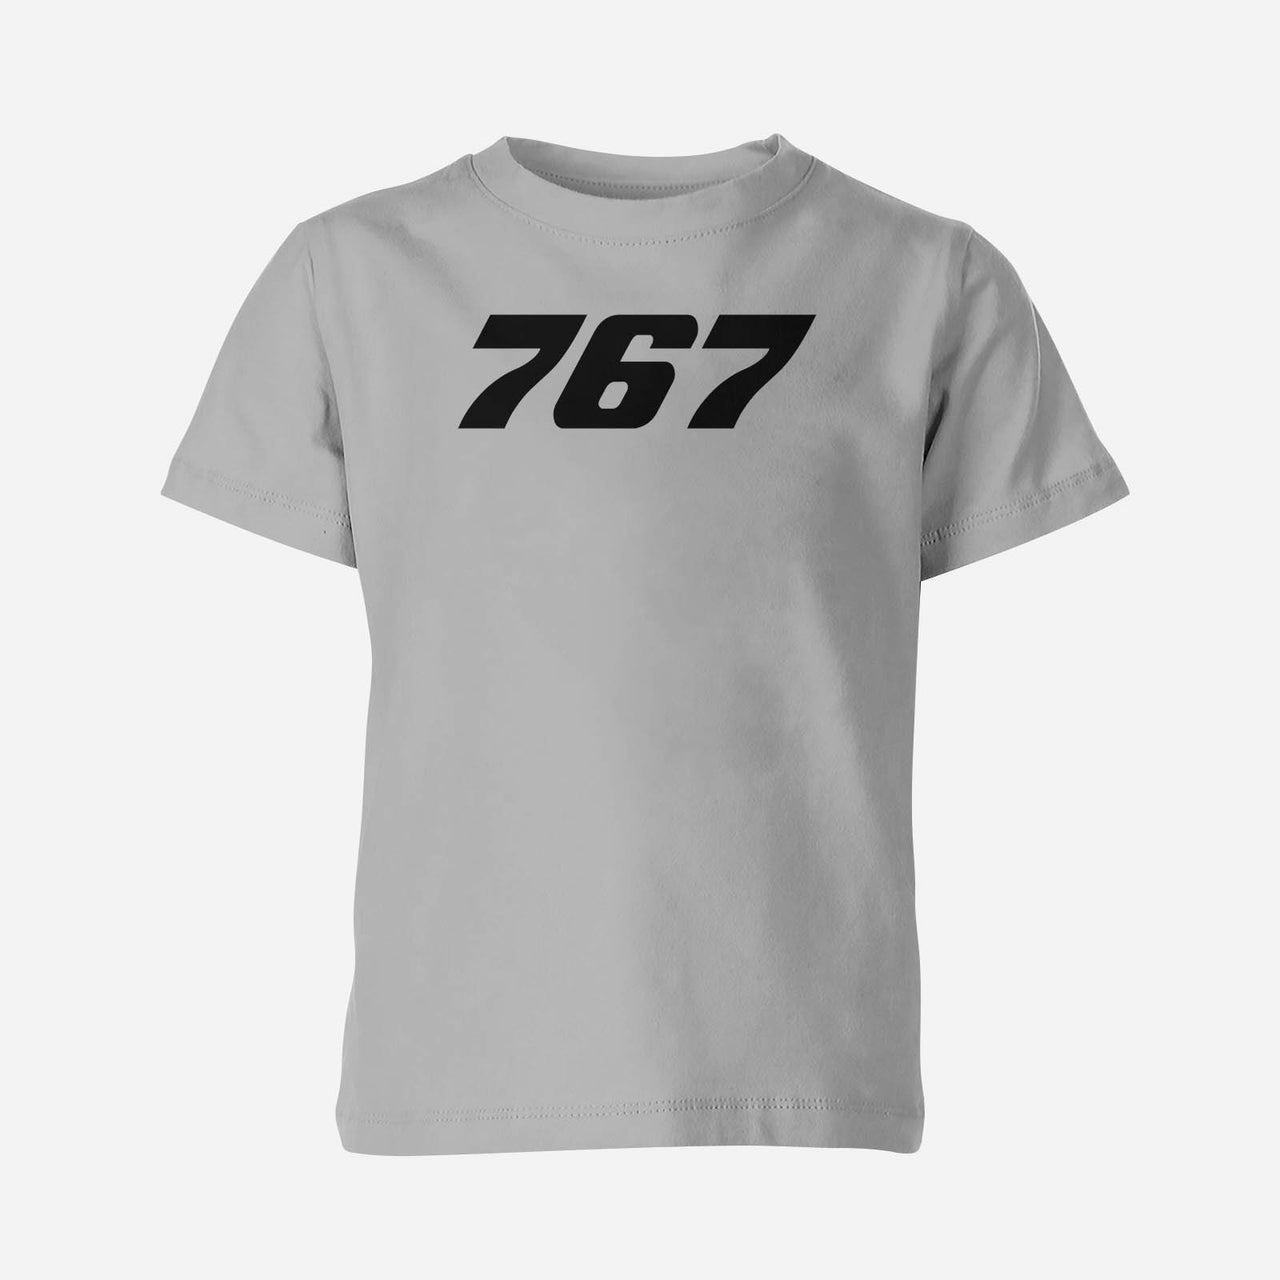 767 Flat Text Designed Children T-Shirts